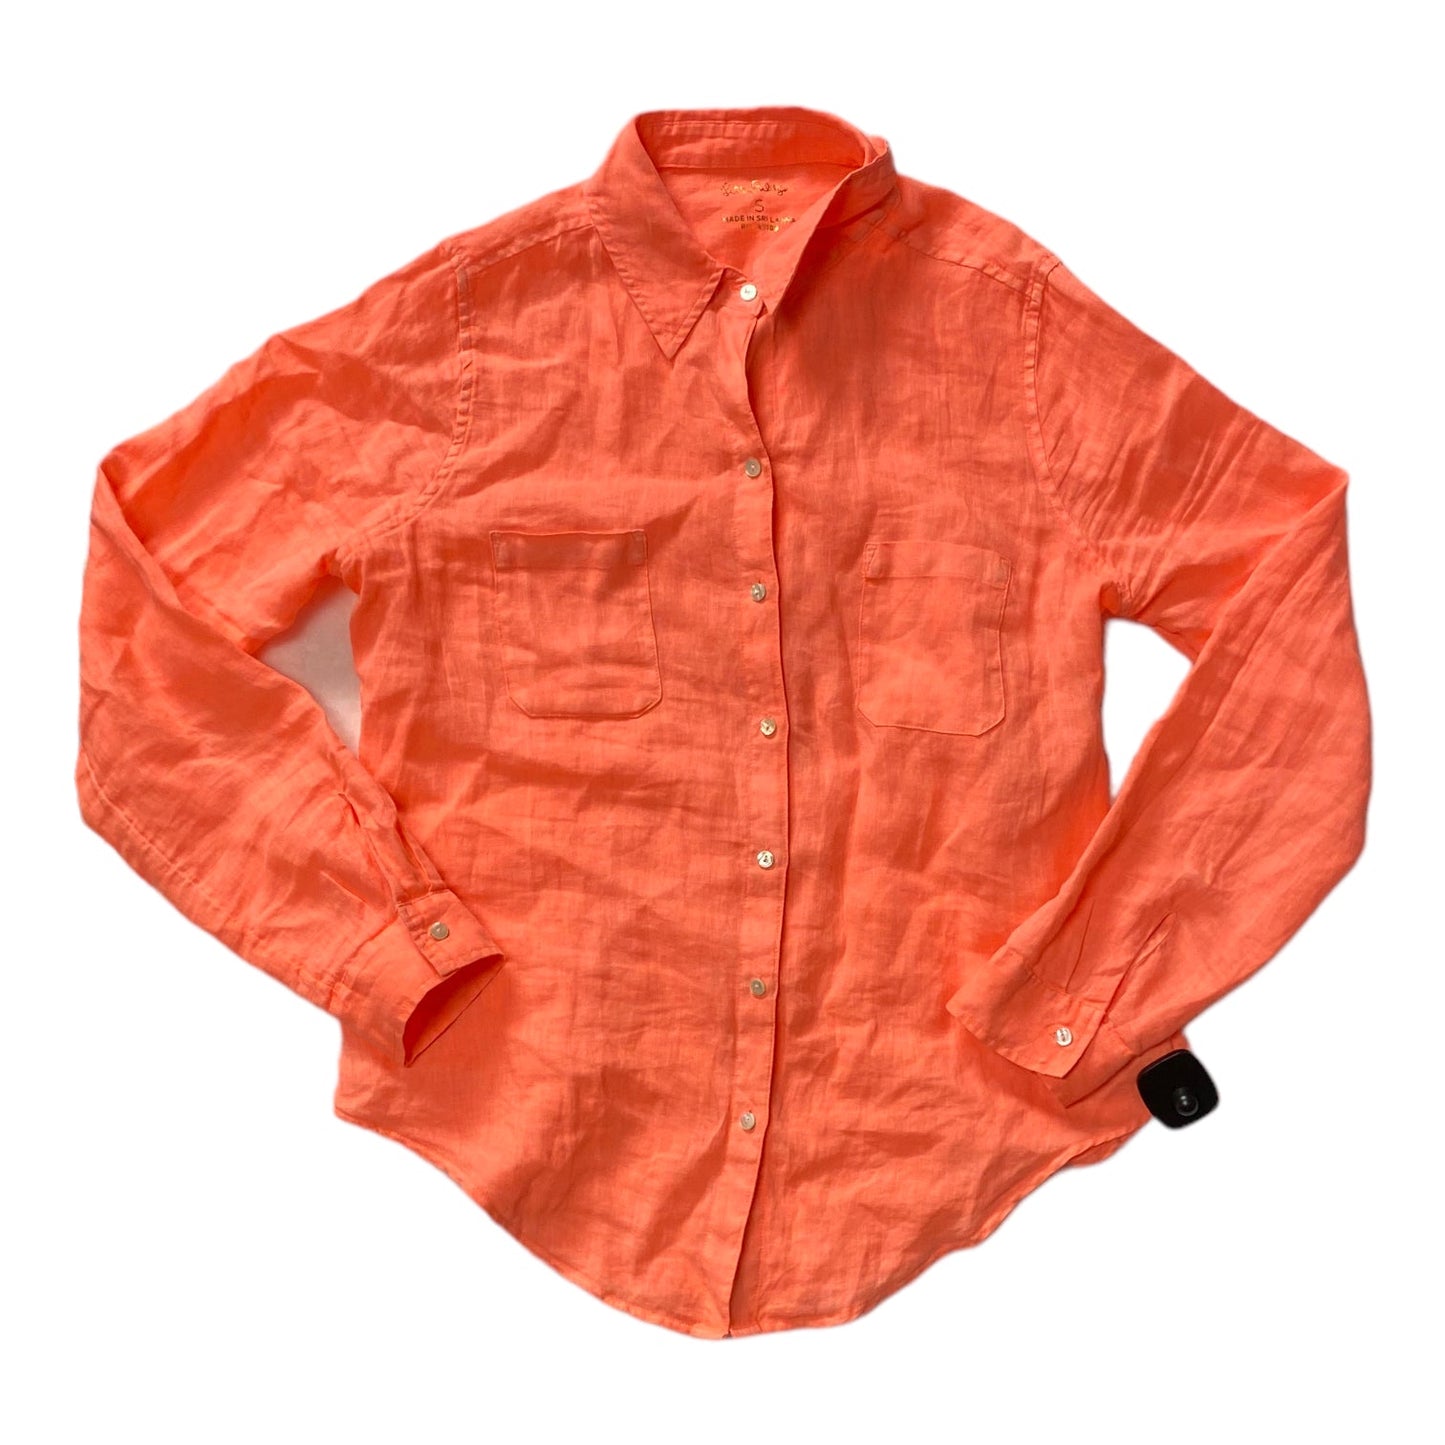 Orange Top Long Sleeve Designer Lilly Pulitzer, Size S